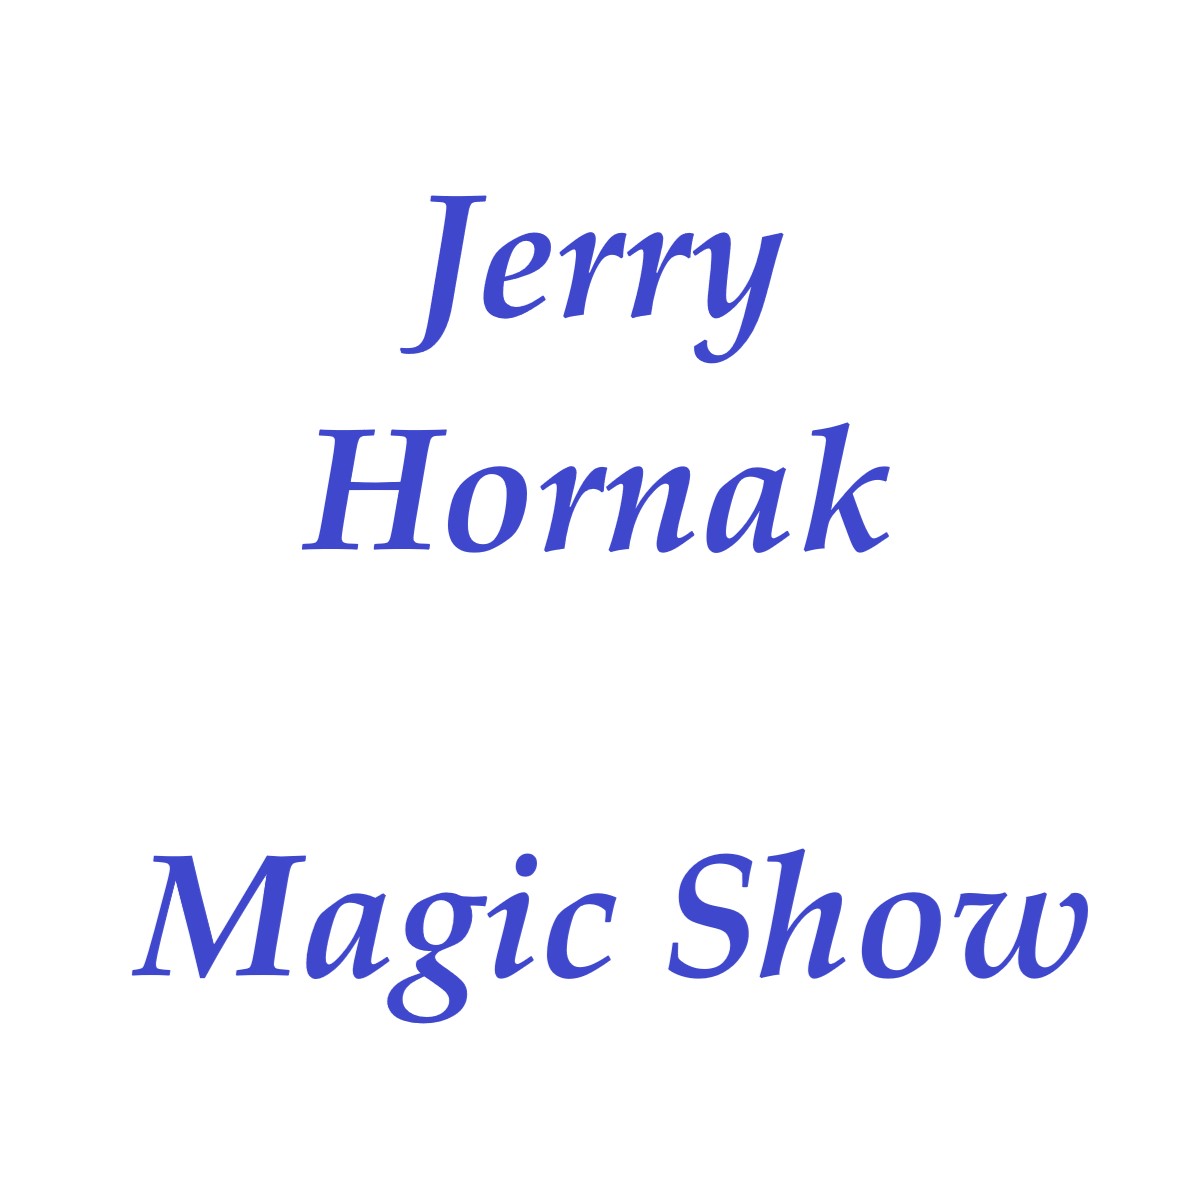 Jerry Hornak